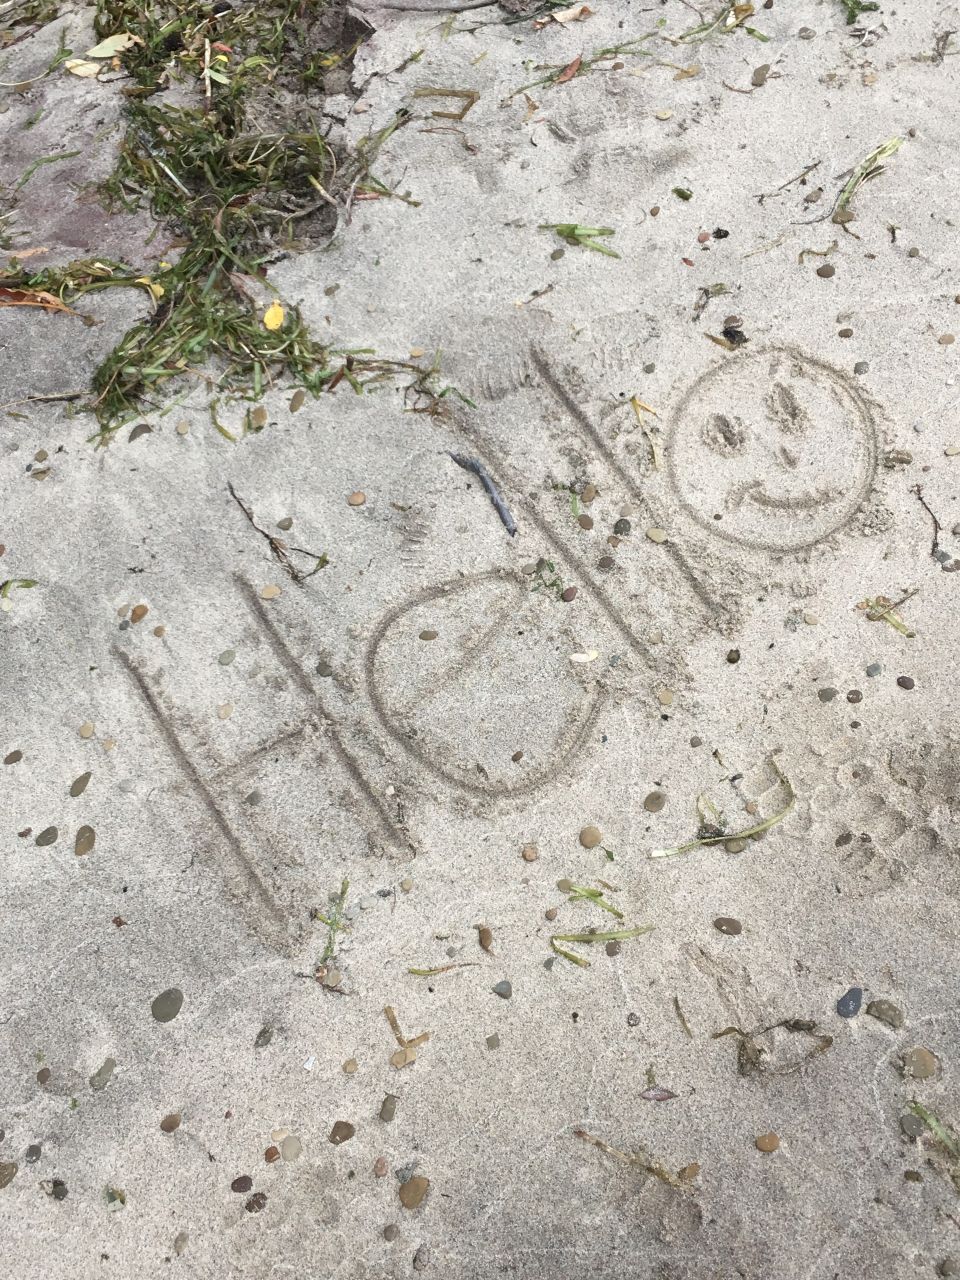 Sand writing